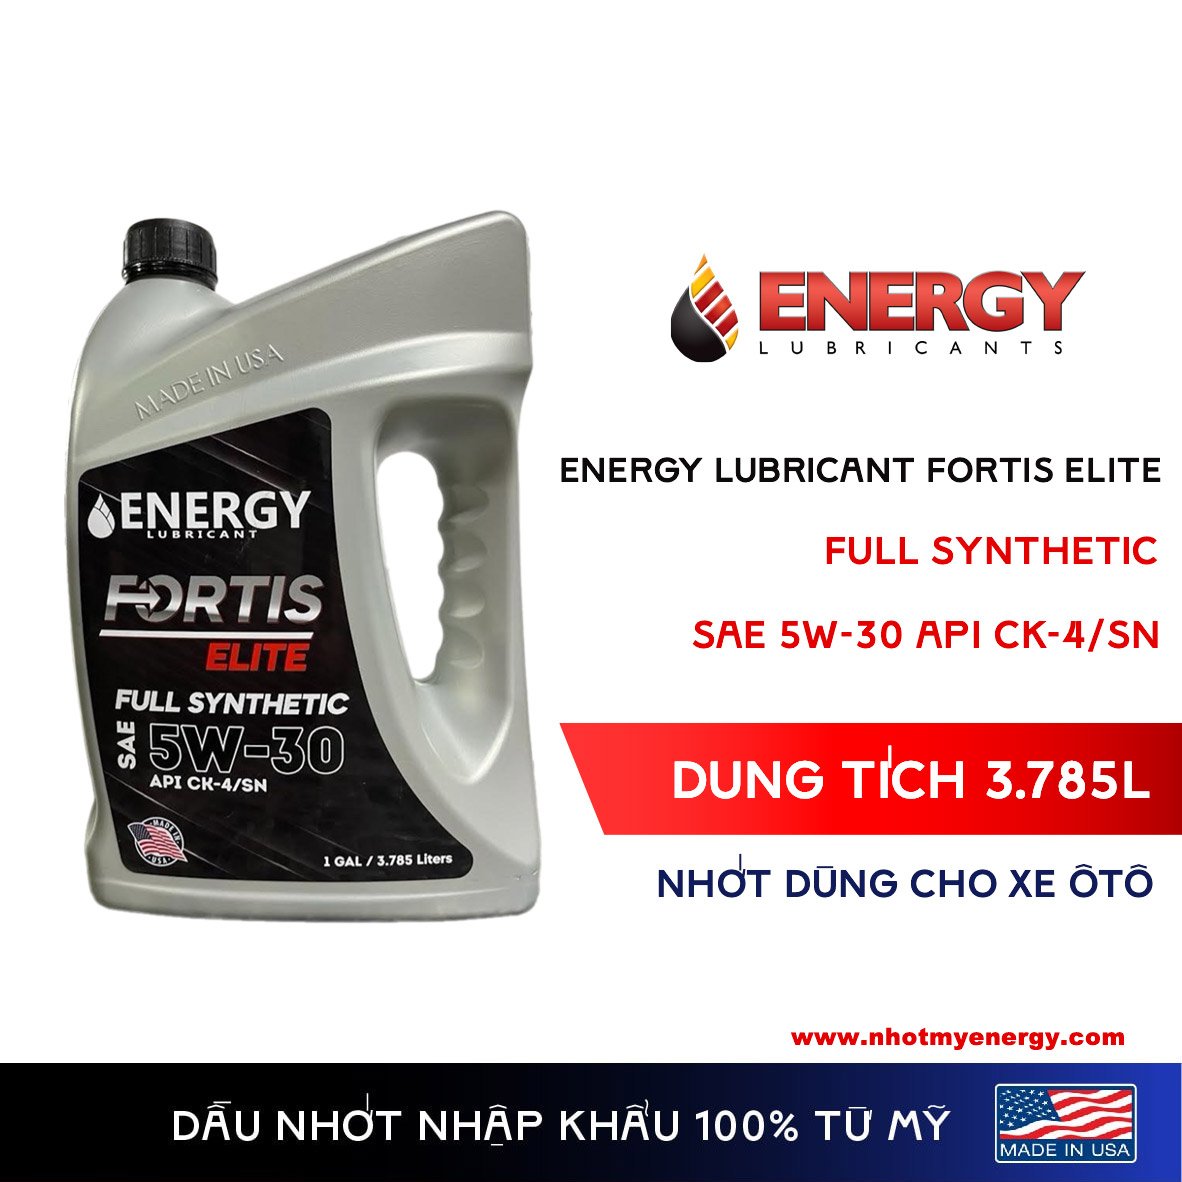 Nhớt dùng cho xe OTO Energy LUBRICANT FORTIS ELITE FULL SYNTHETIC  SAE 5w-30 API CK-4/SN. Dung tích 3,785l